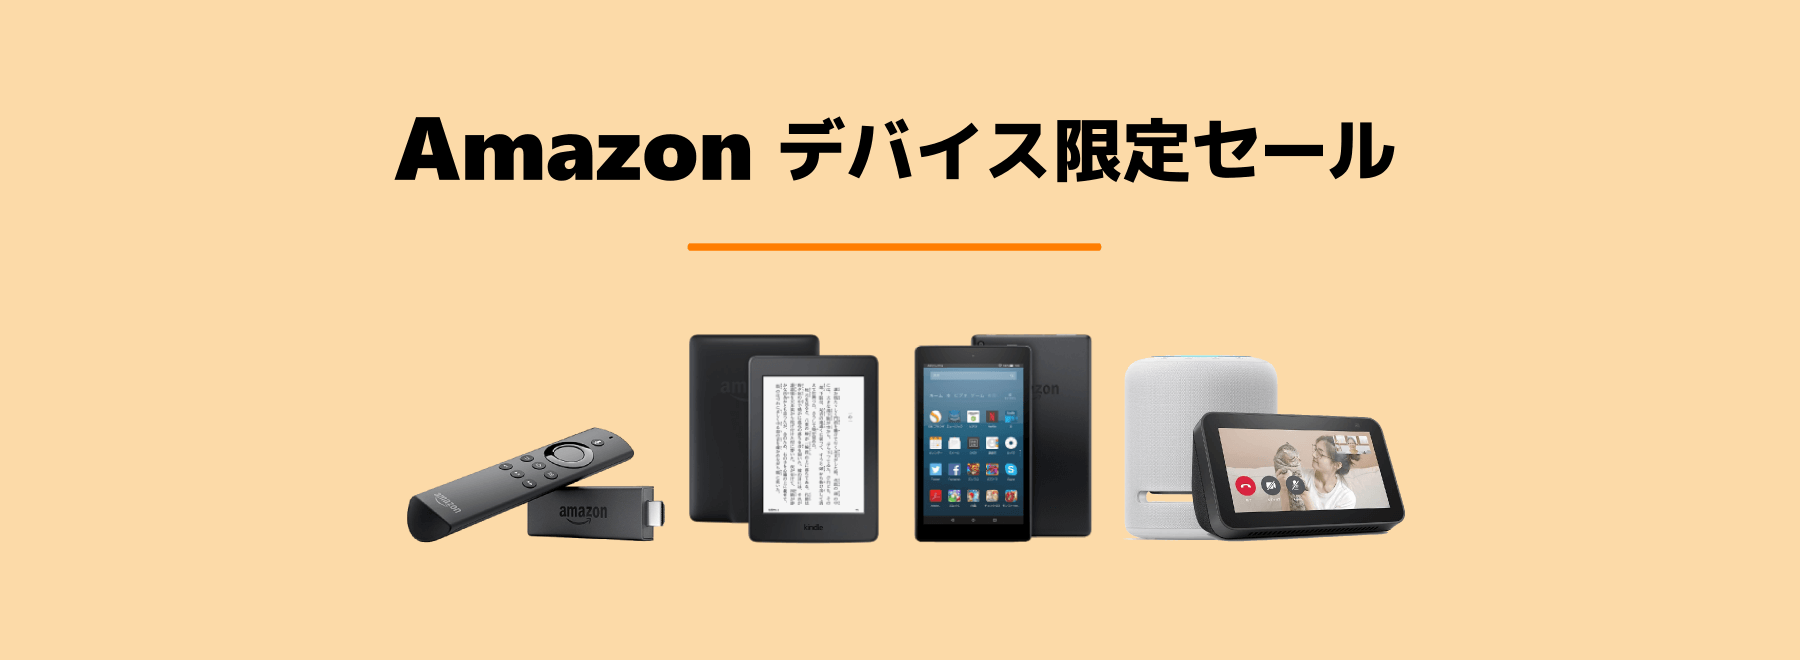 Amazonデバイス限定セール